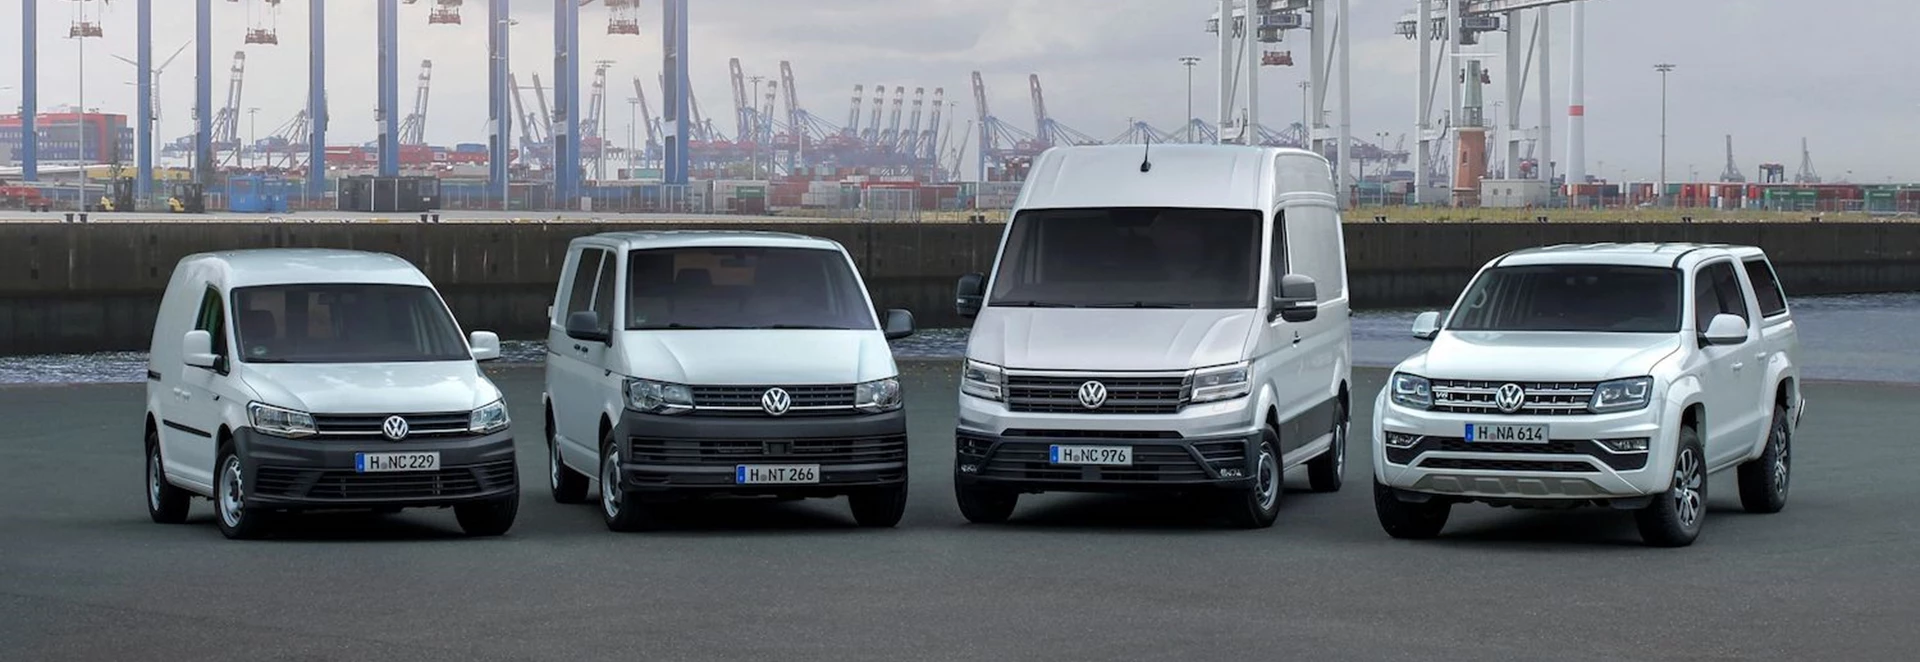 Volkswagen Commercial Vehicle sales up 14.4 per cent 